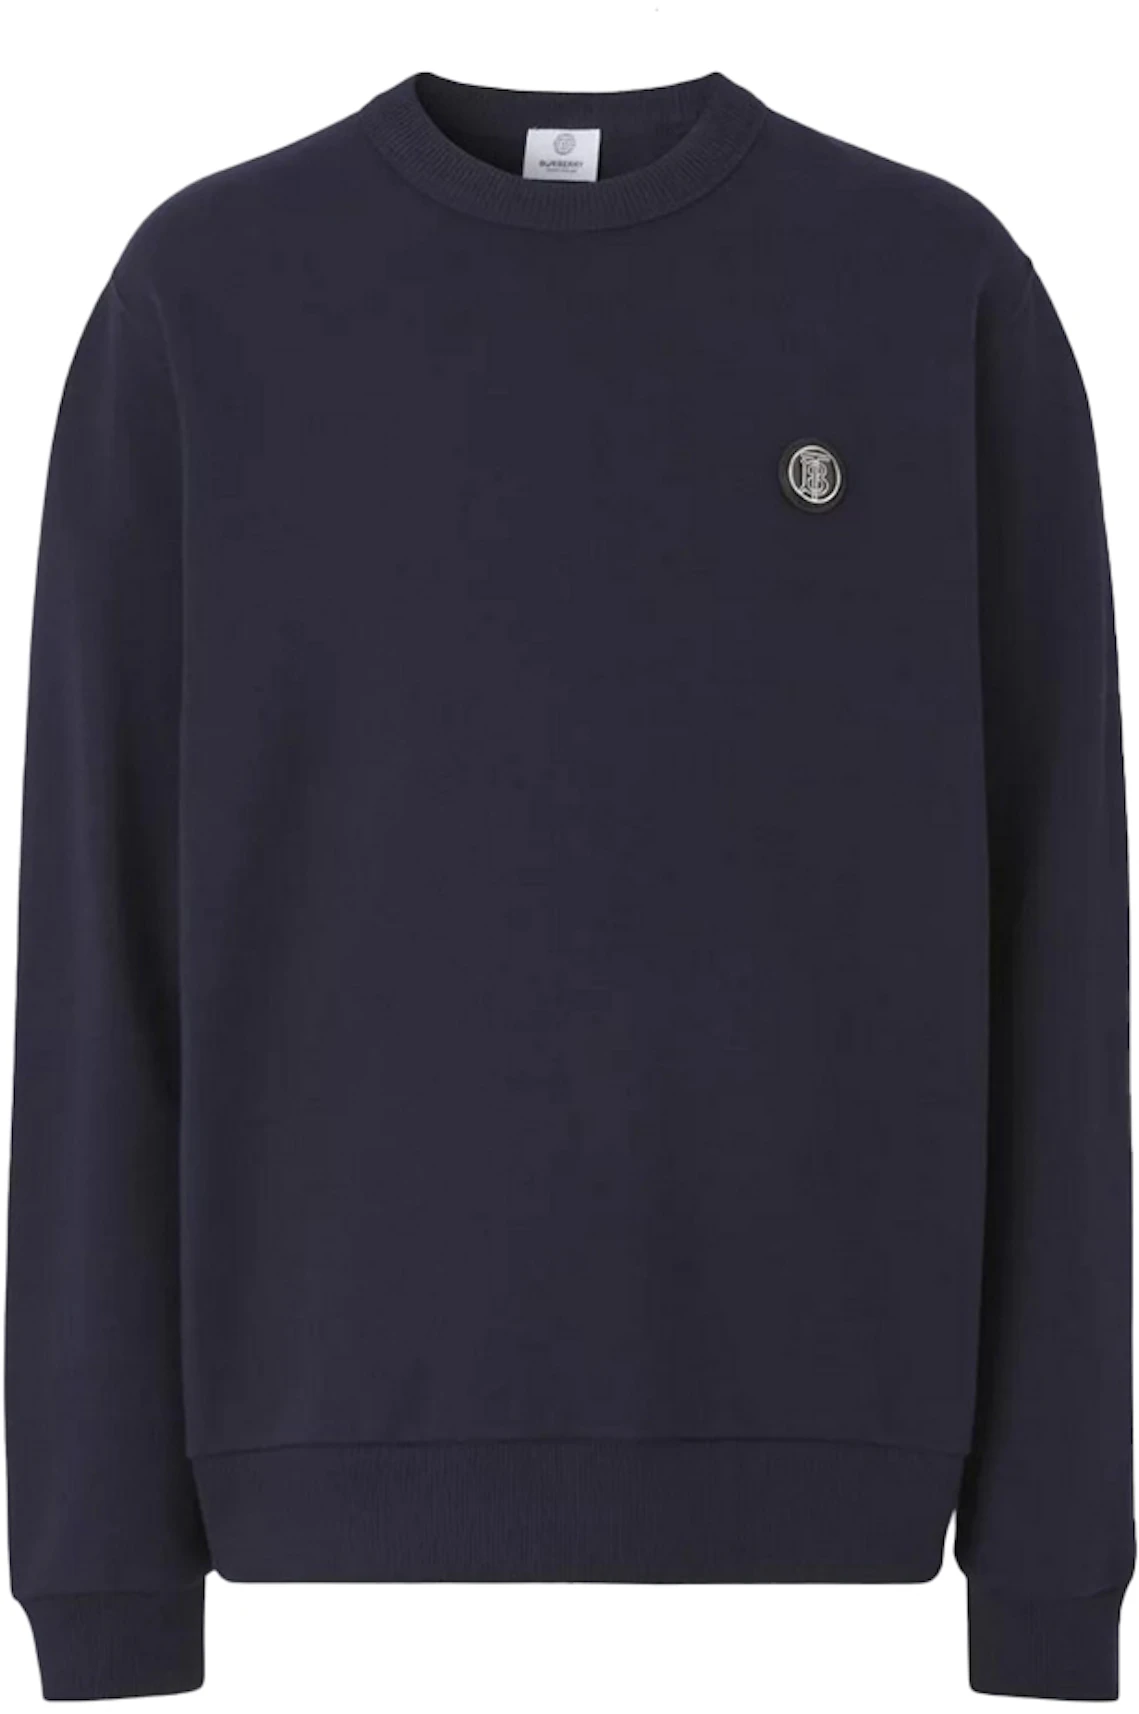 Burberry Monogram Motif Applique Cotton Sweatshirt Navy - US